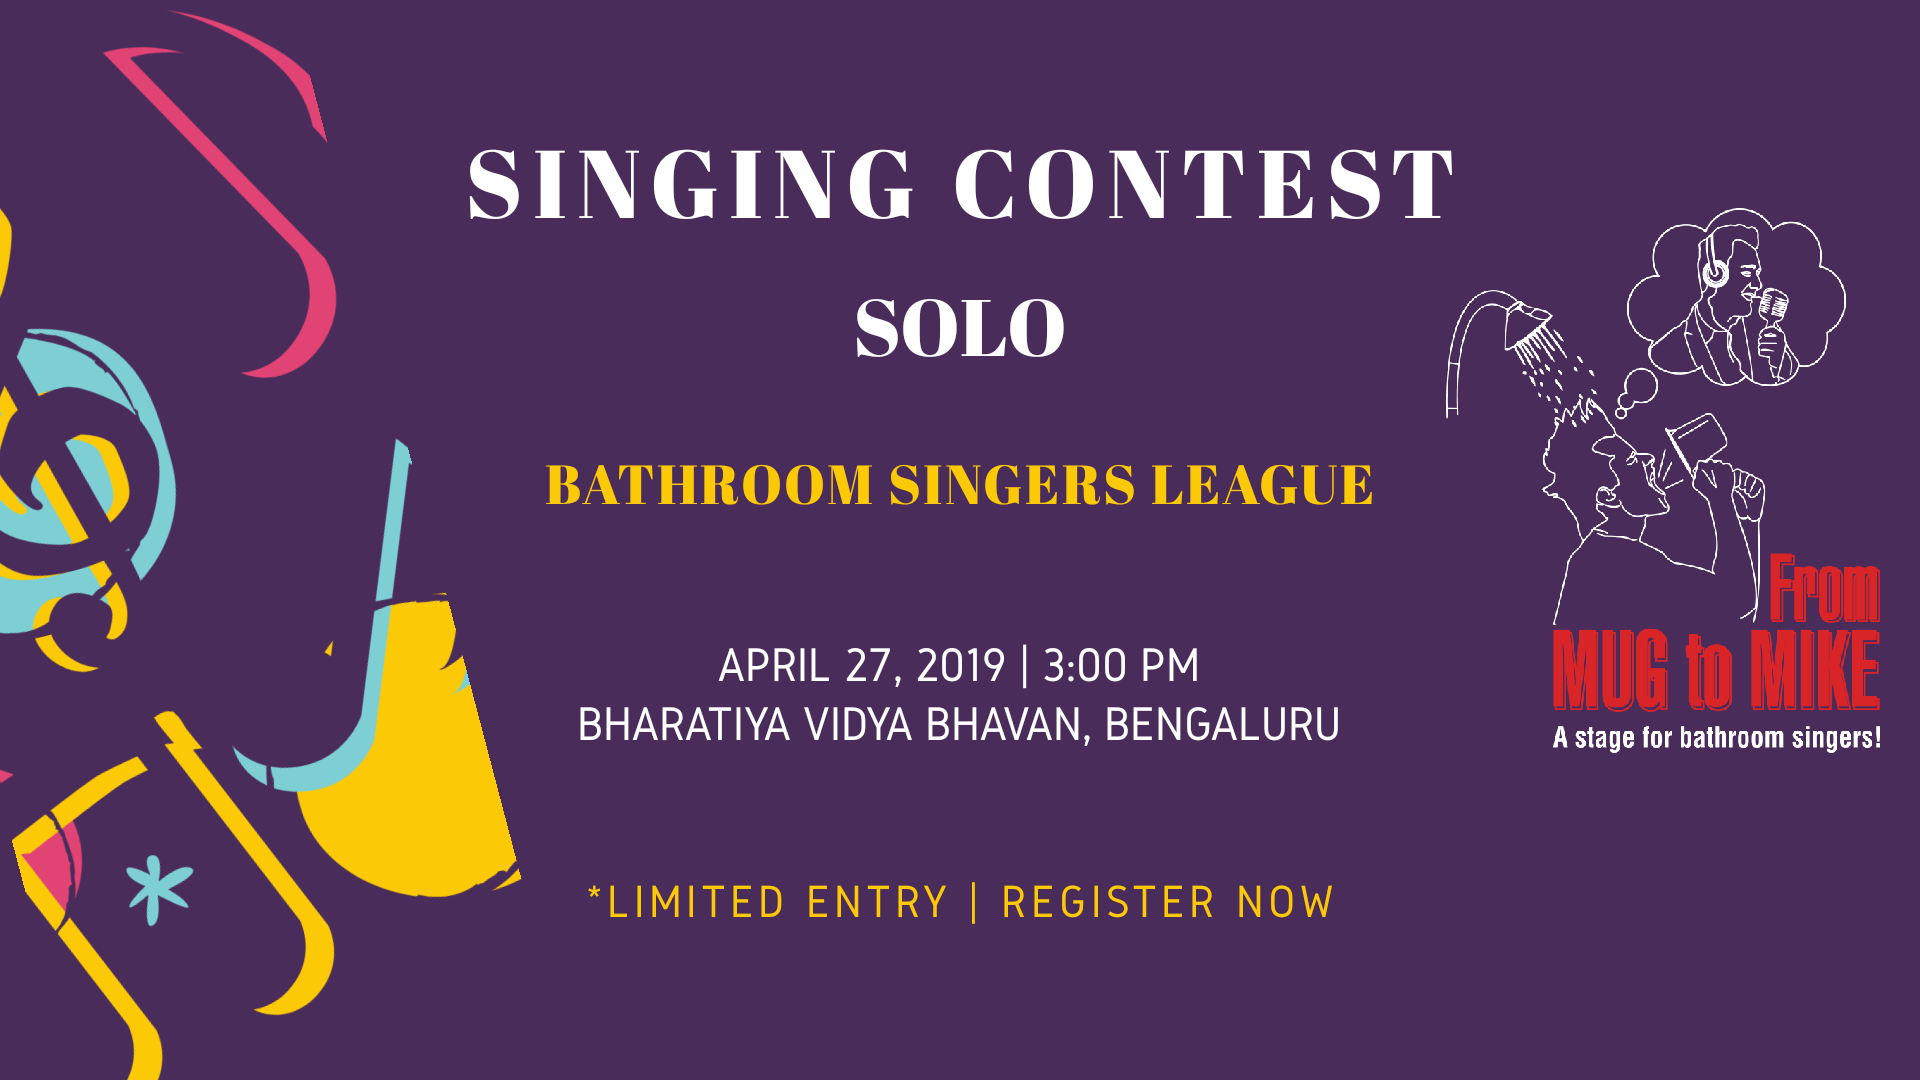 Solo Singing Contest – Bathroom Singers League